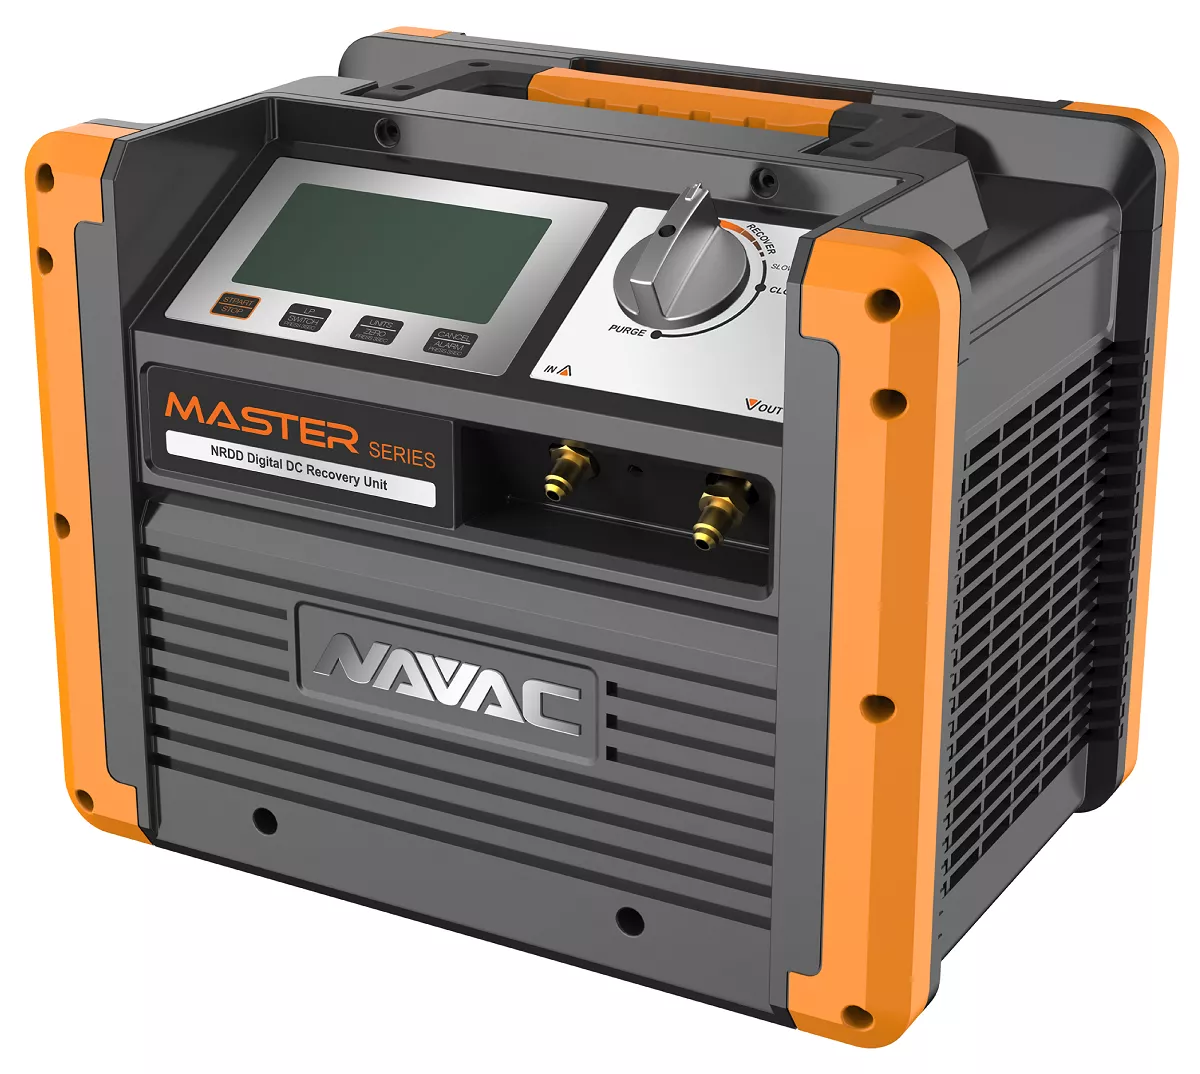 NAVAC presents a next-generation recovery unit